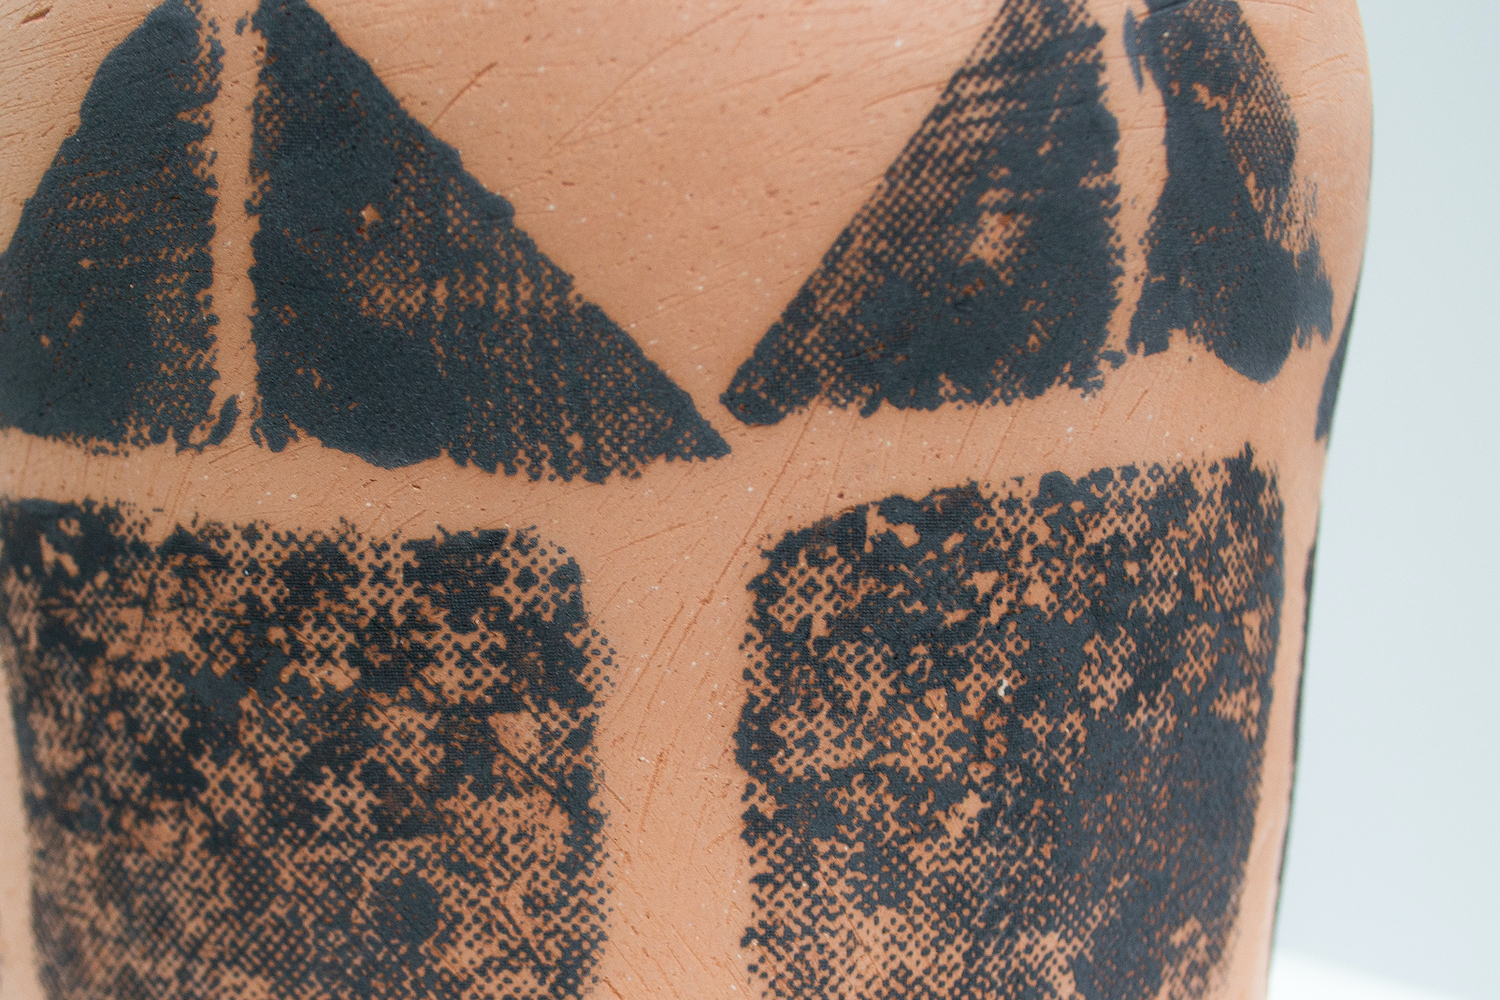 Hannah deJonge / Pieces (Detail) - Screen-printed underglaze on stoneware
2020